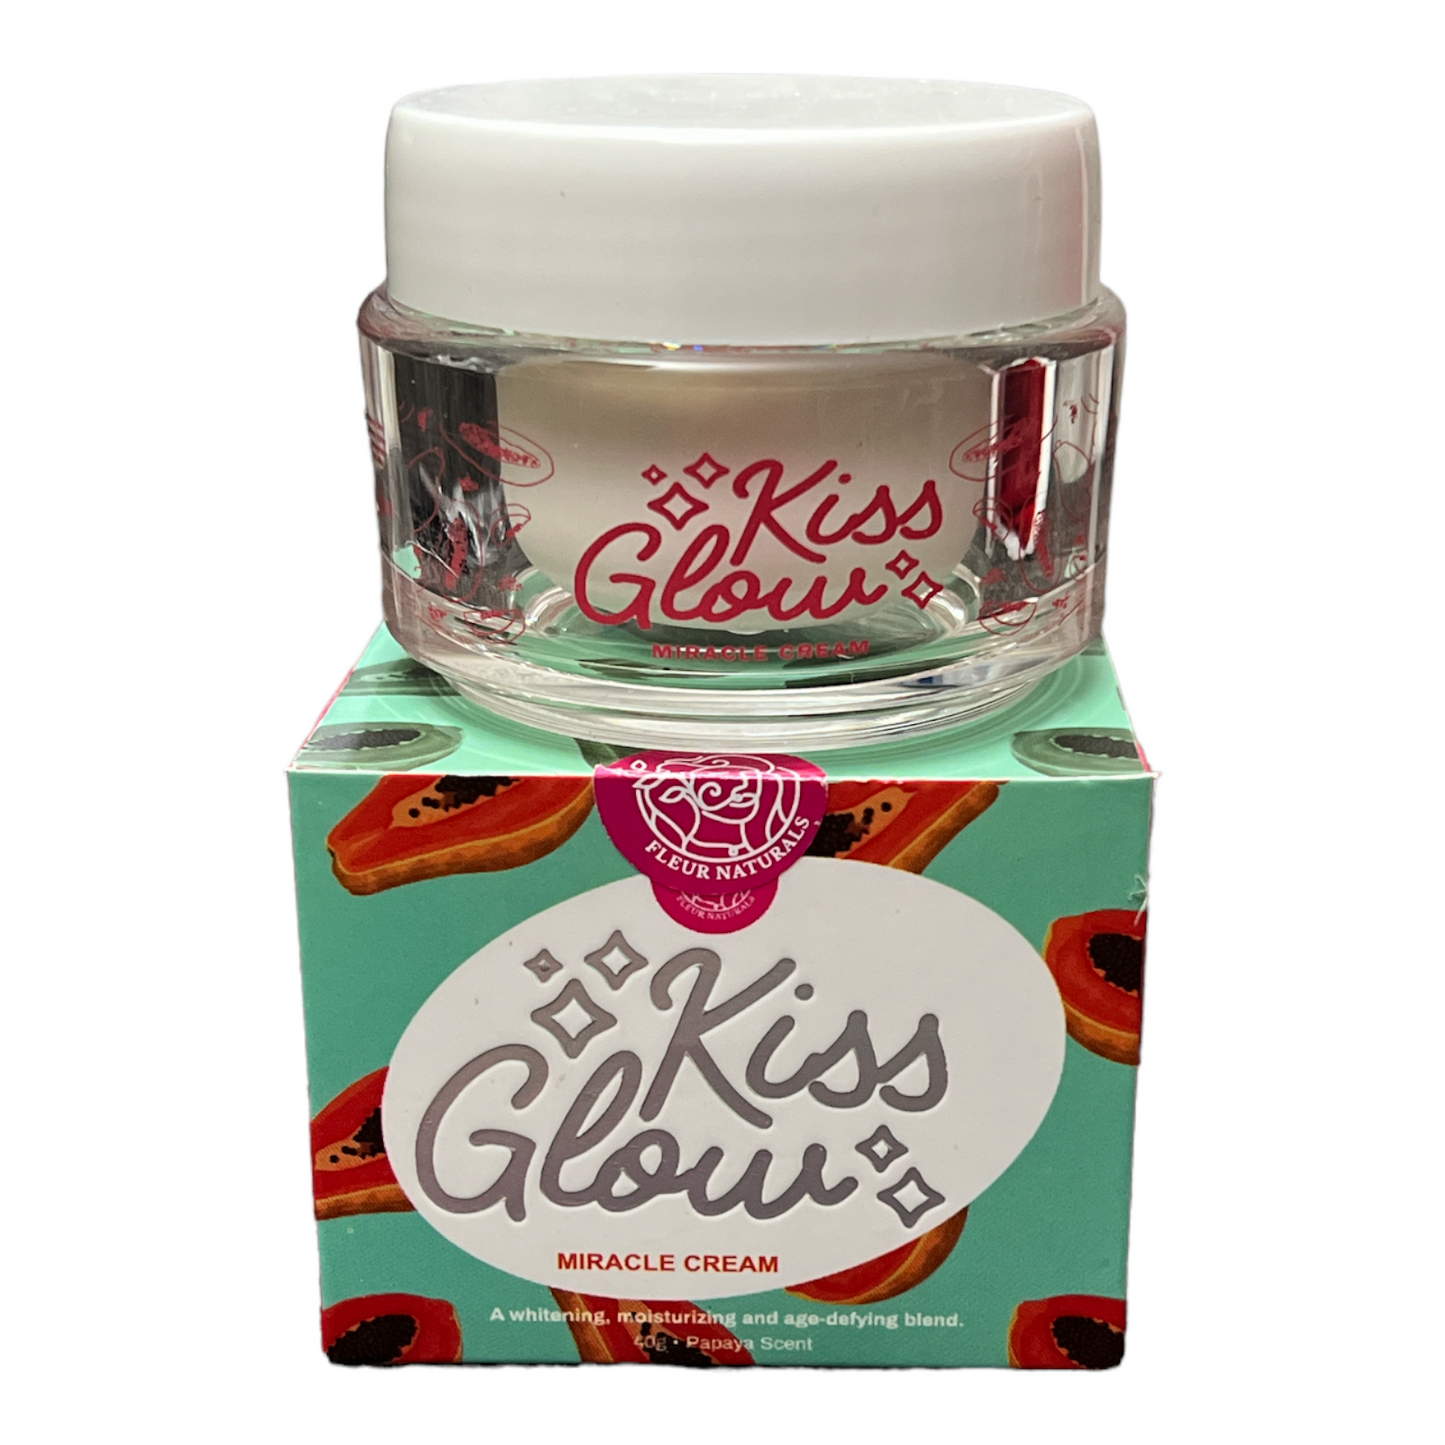 Kiss Glow miracle cream